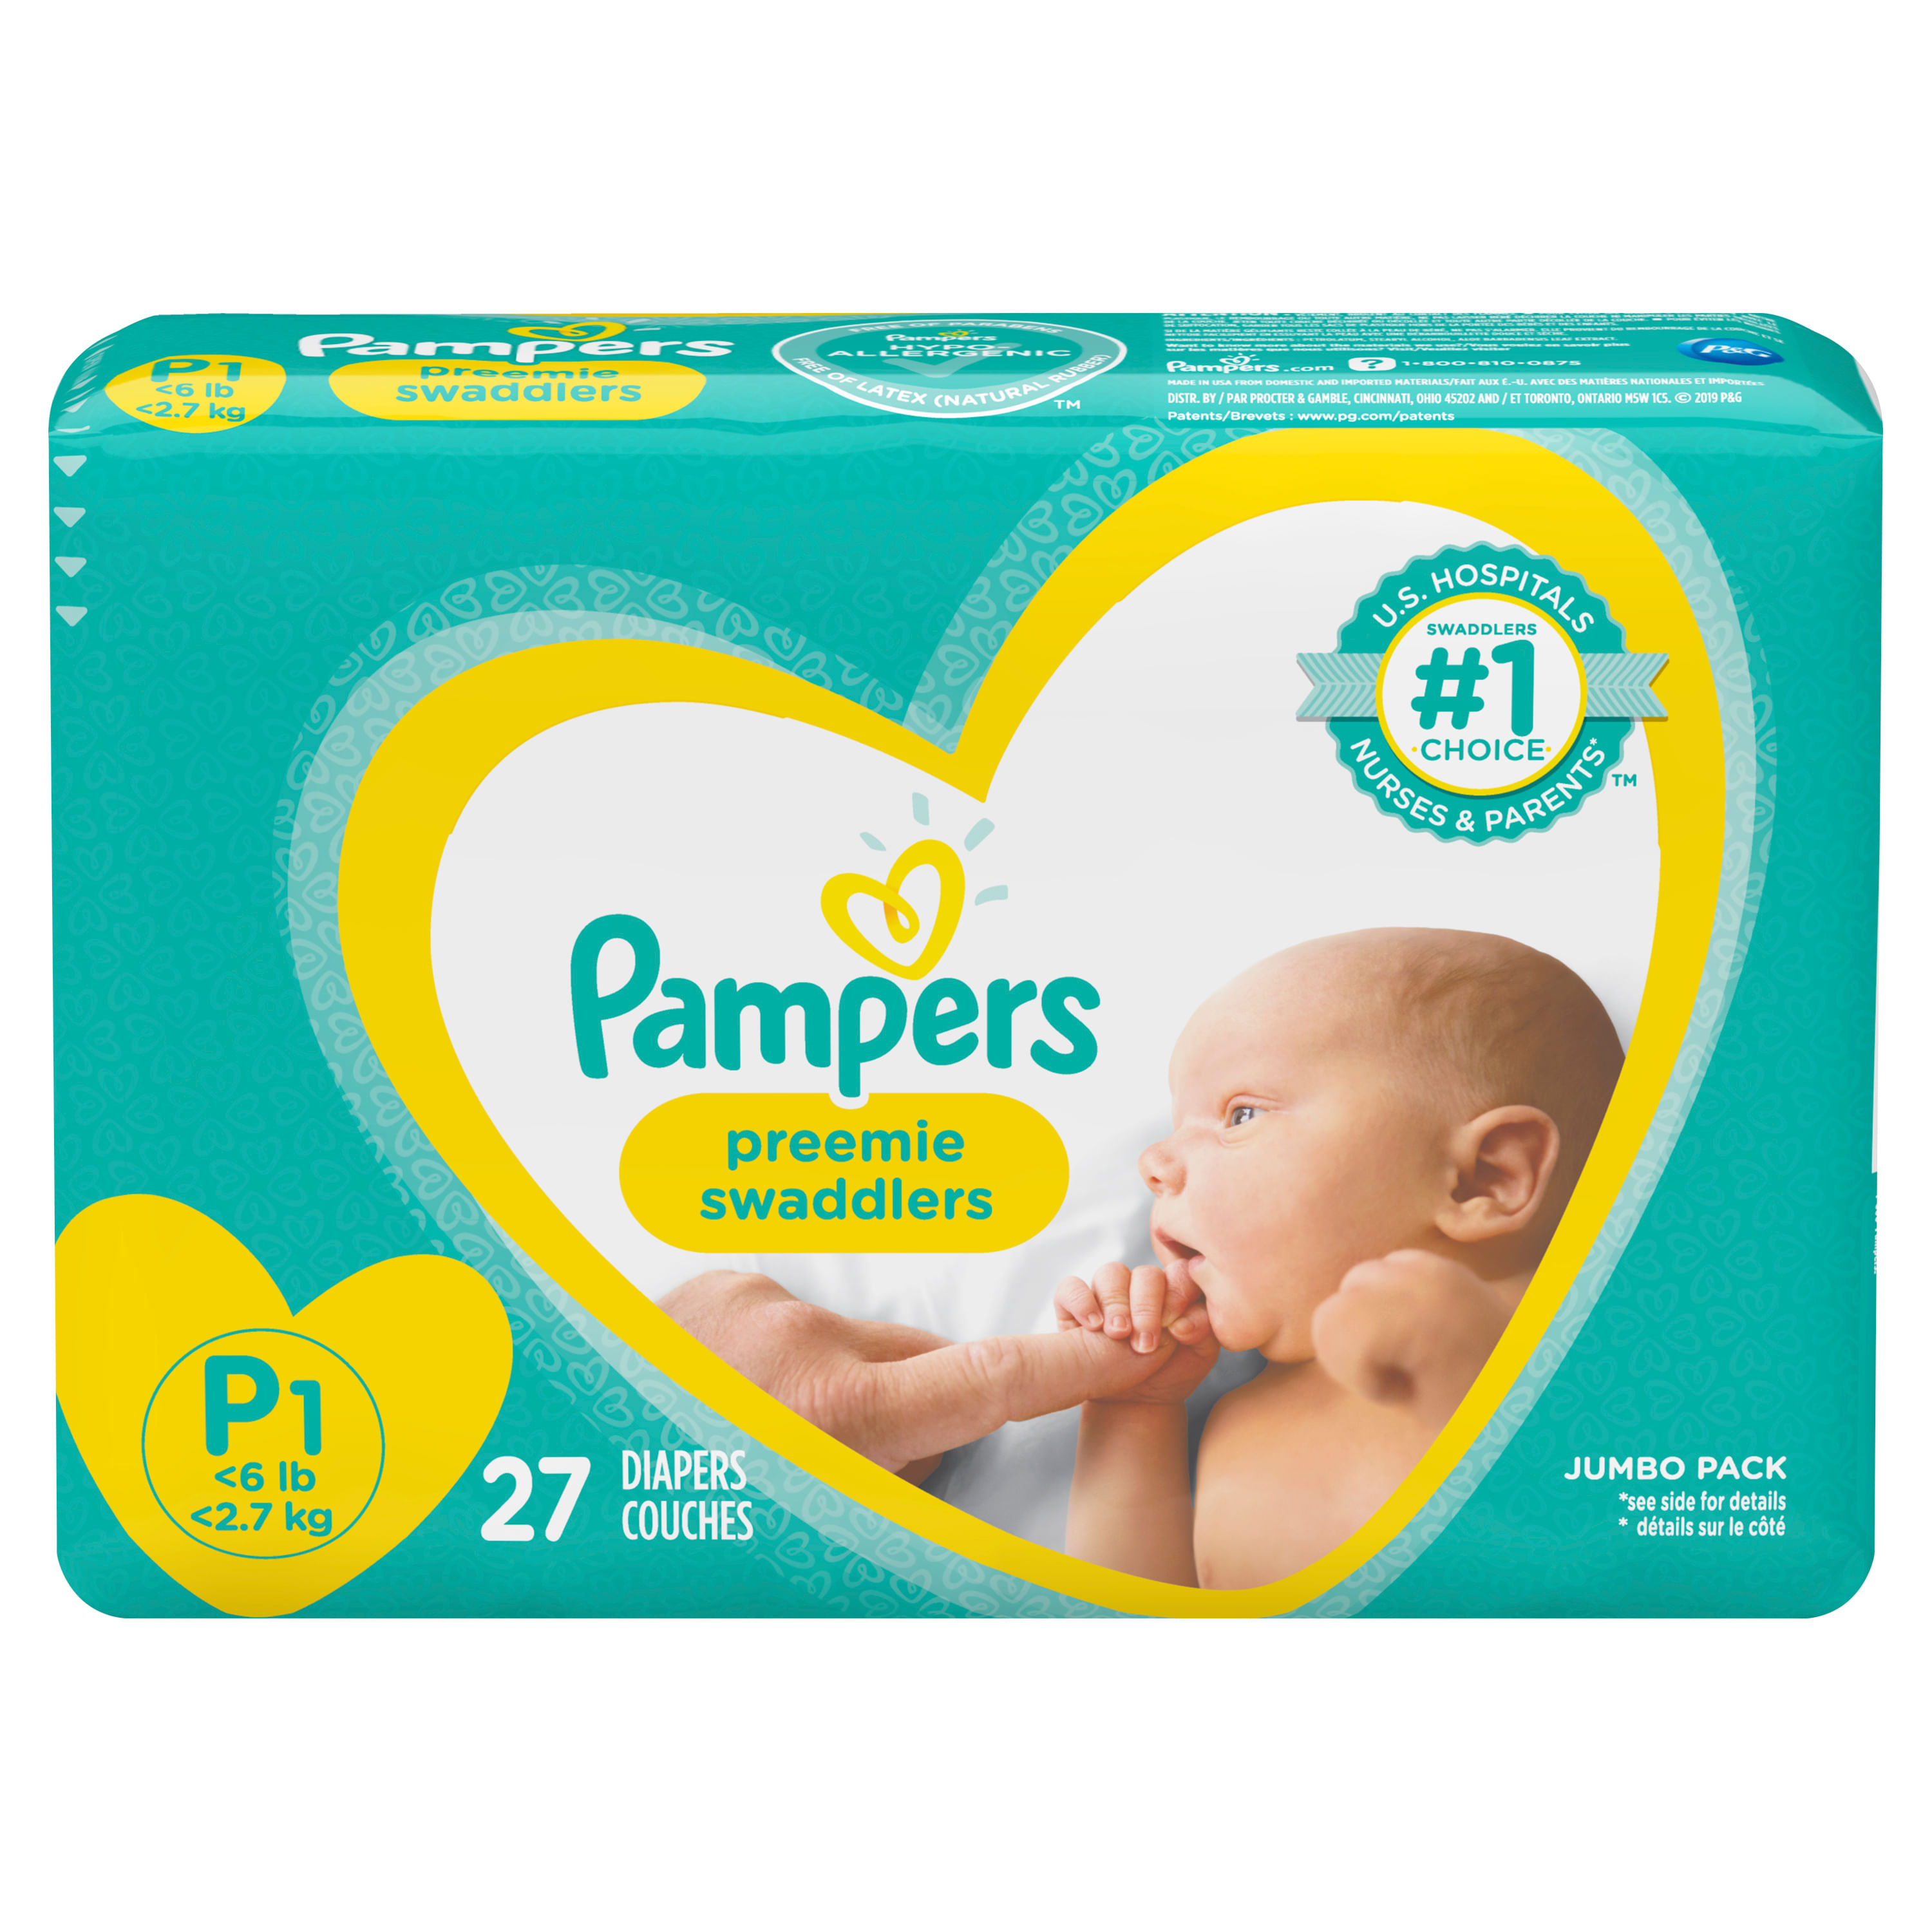 Comprar Baby Parents Choice Diaper Size 6 -23 Unidades